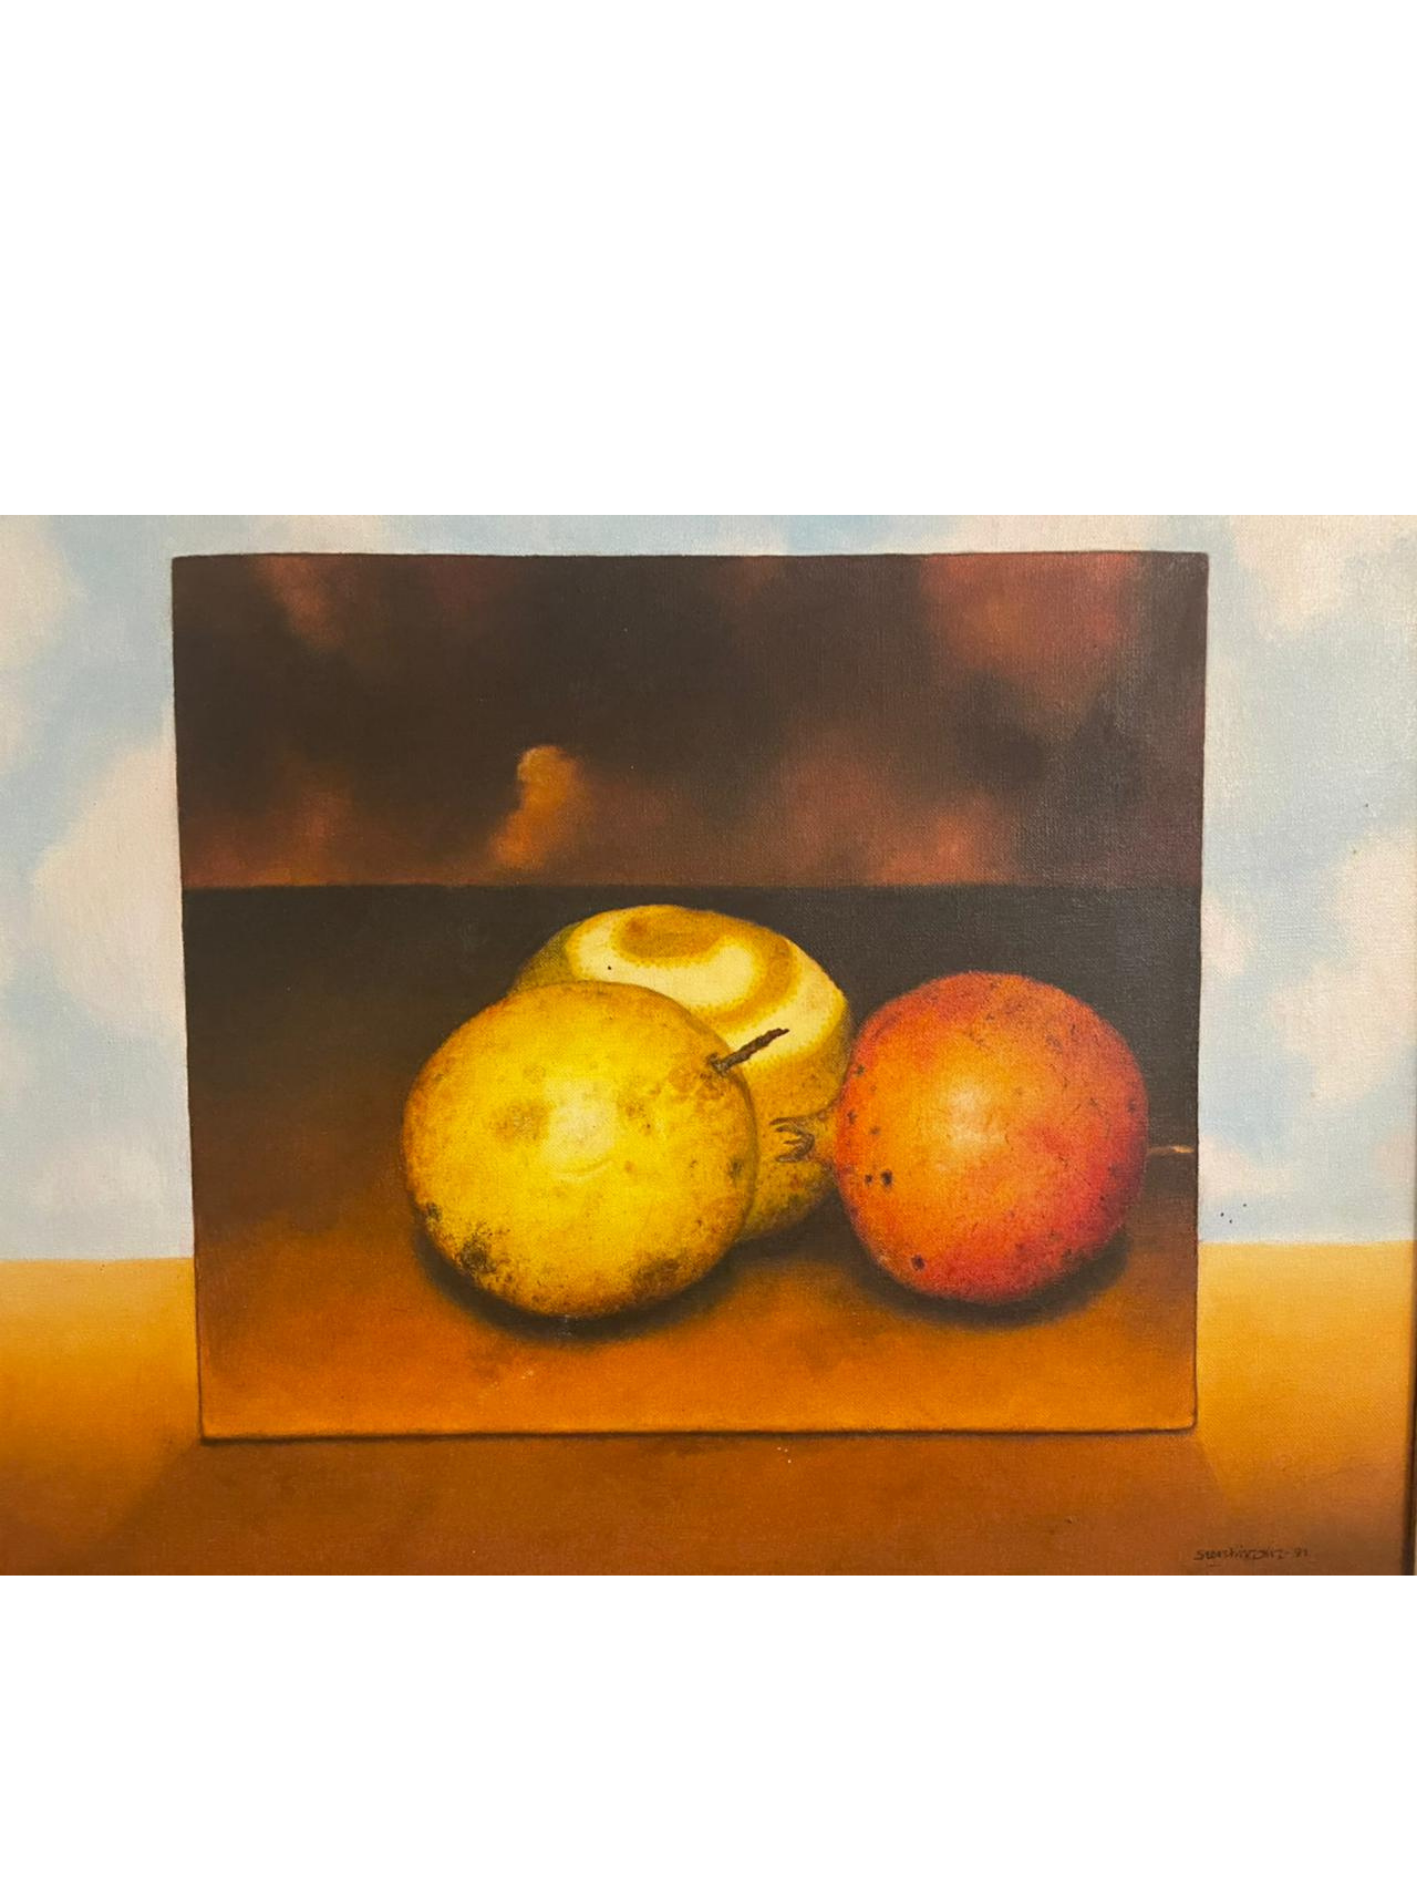 Cuadro de Sebastián Diaz 60 x 50 cm. 3 frutas